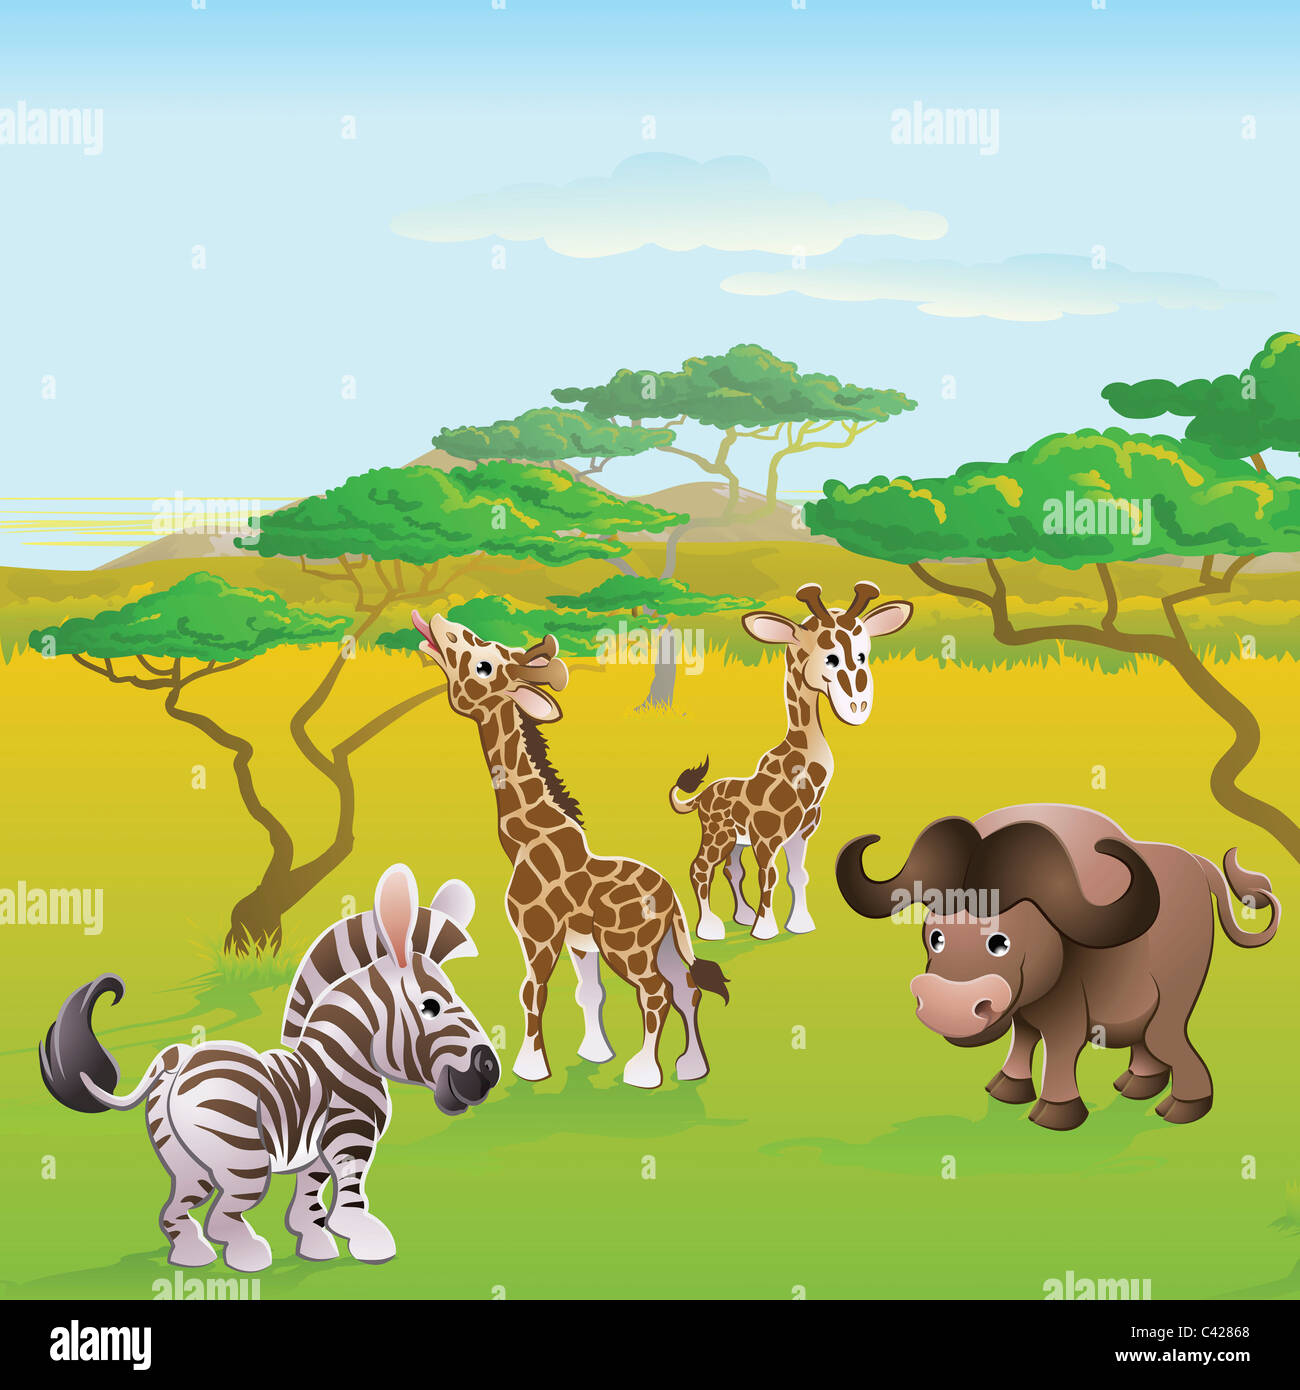 Cute African safari animal cartoon characters scene. Series of three illustrations forming panoramic landscape. Stock Photo